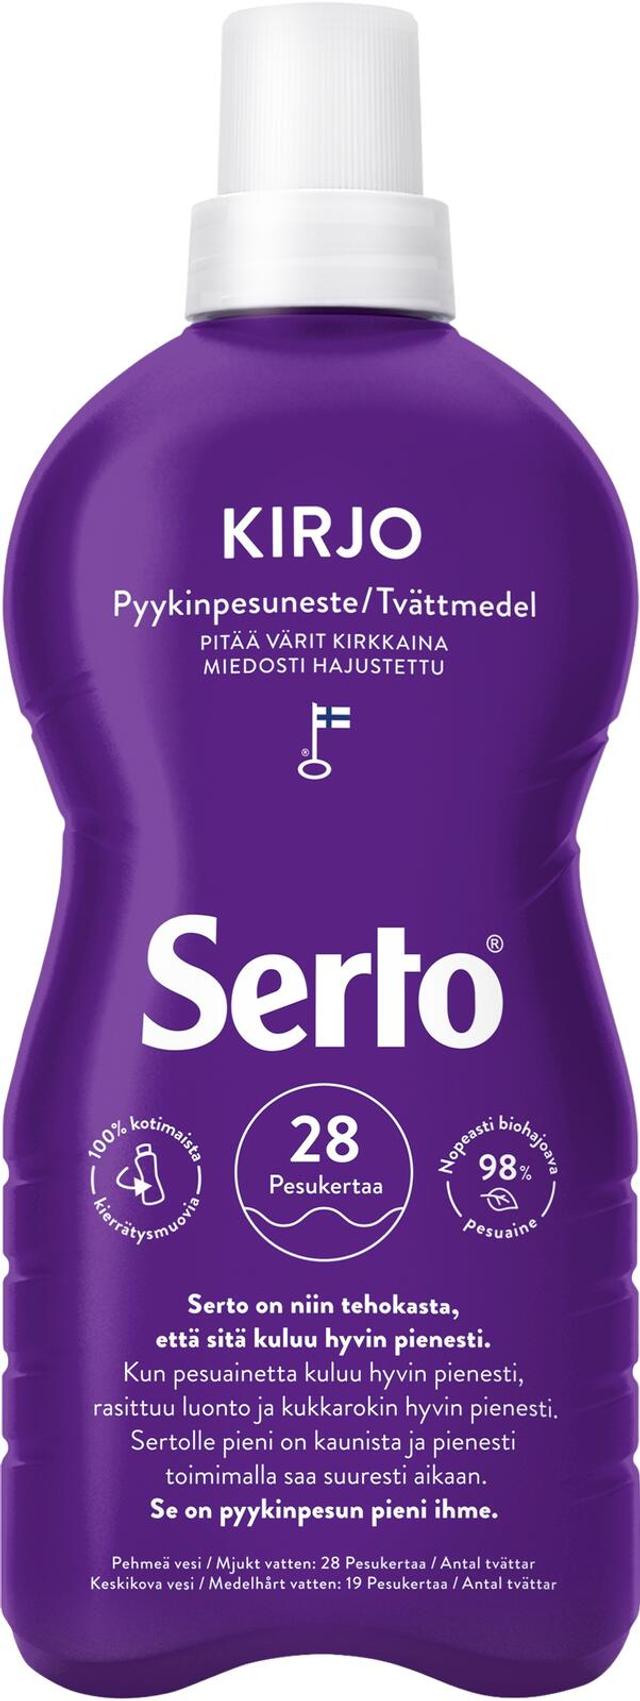 Serto Kirjo Pyykinpesuneste 750 ml